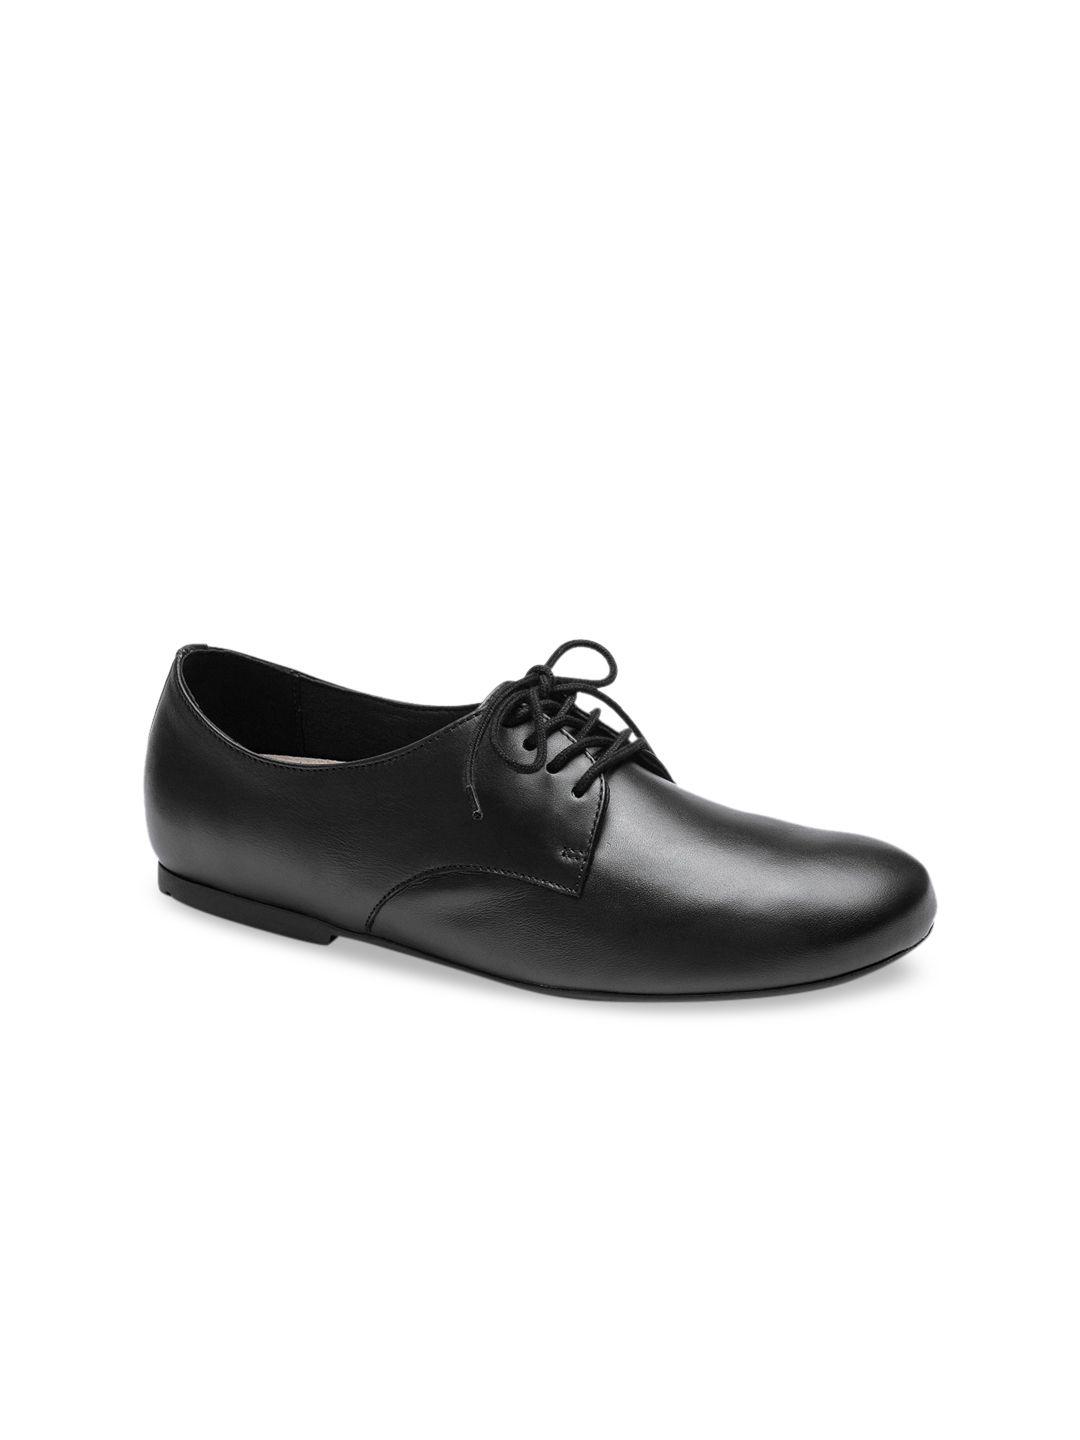 birkenstock women saunders natural leather black narrow width shoes